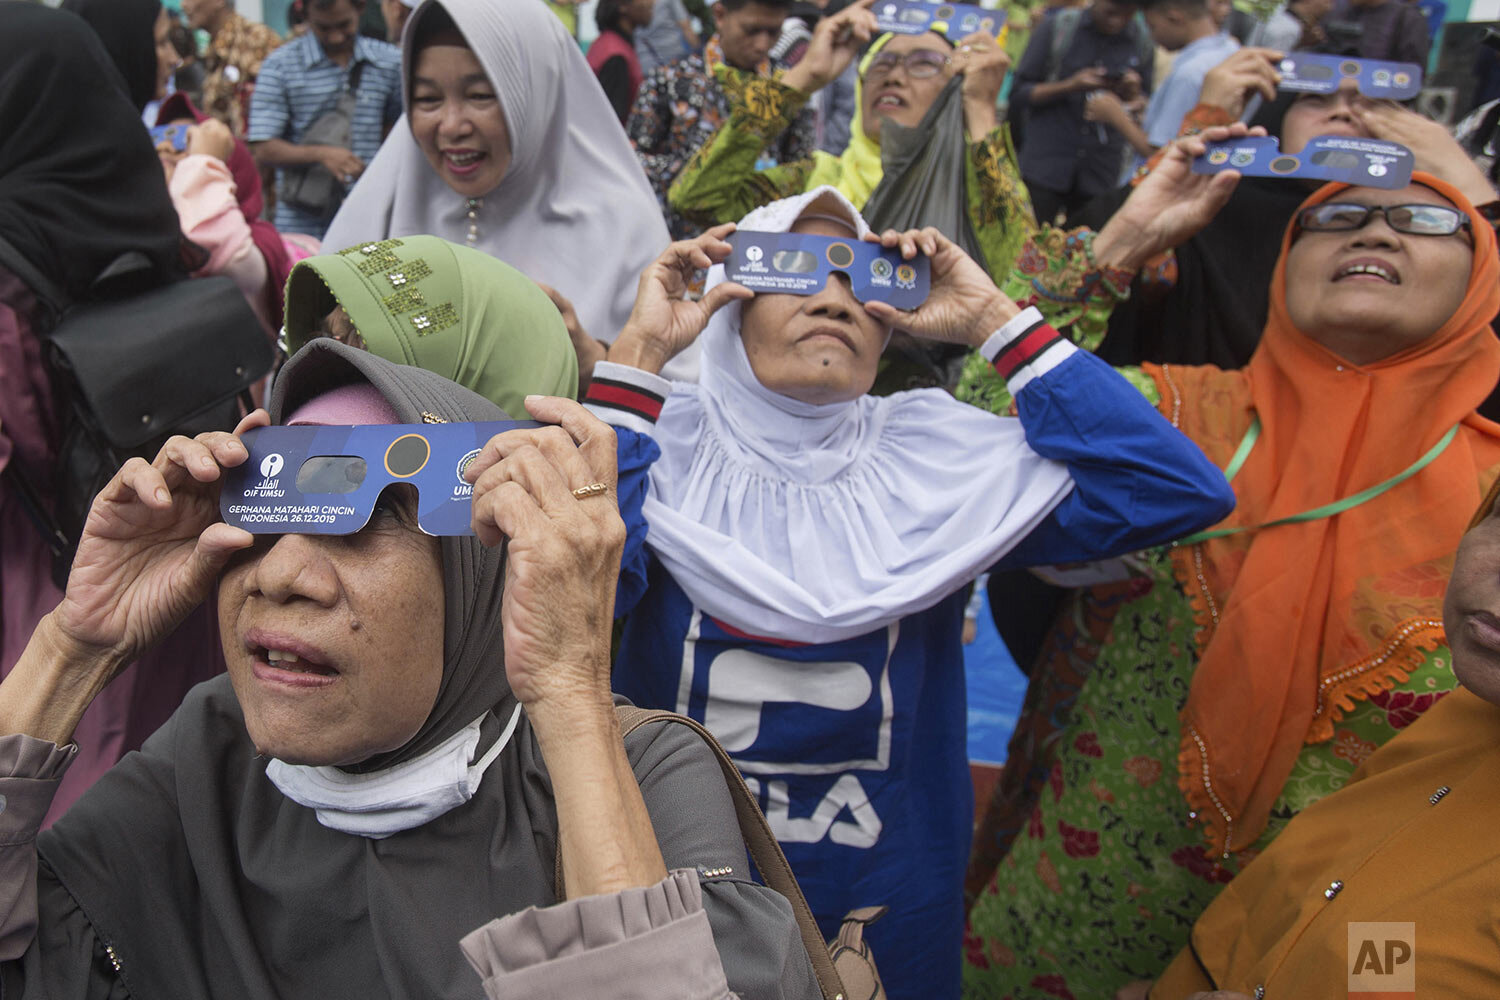  Muslim women watch a solar eclipse through special glasses at the campus of the Faculty of Astronomy of Muhammadiah University of North Sumatra (UMSU) in Medan, Indonesia, Thursday, Dec. 26, 2019. (AP Photo/Binsar Bakkara) 